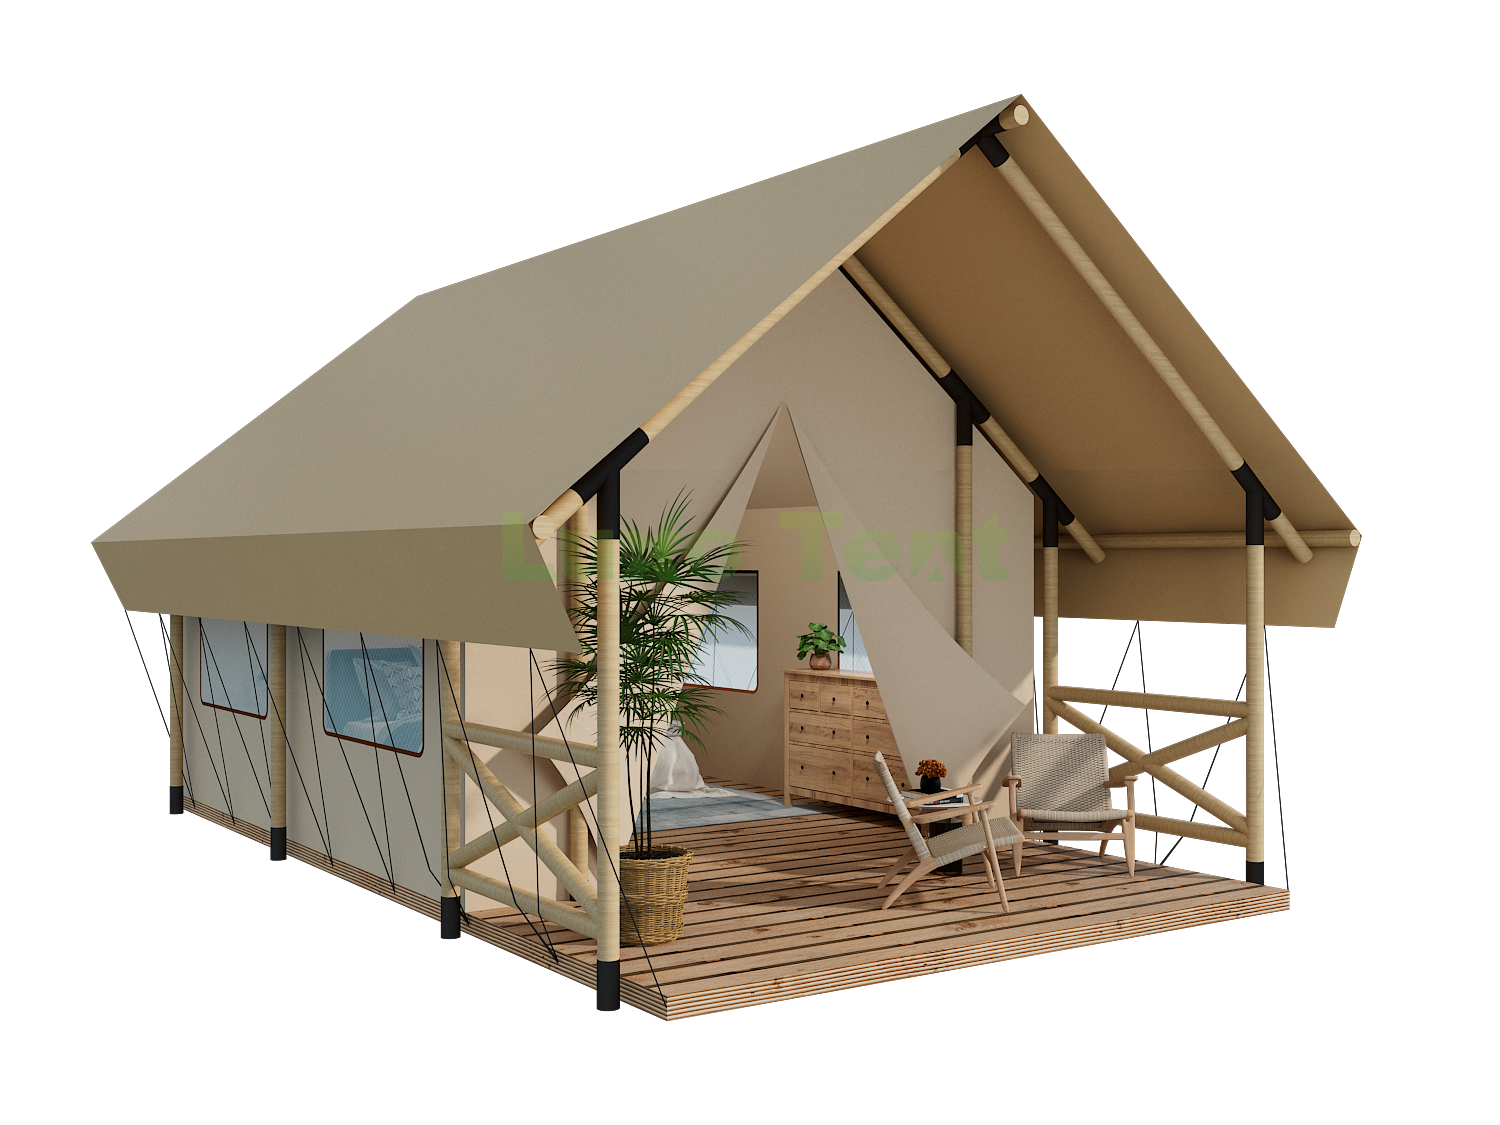 Wooden frame canvas living comfortable safari tent house for resort